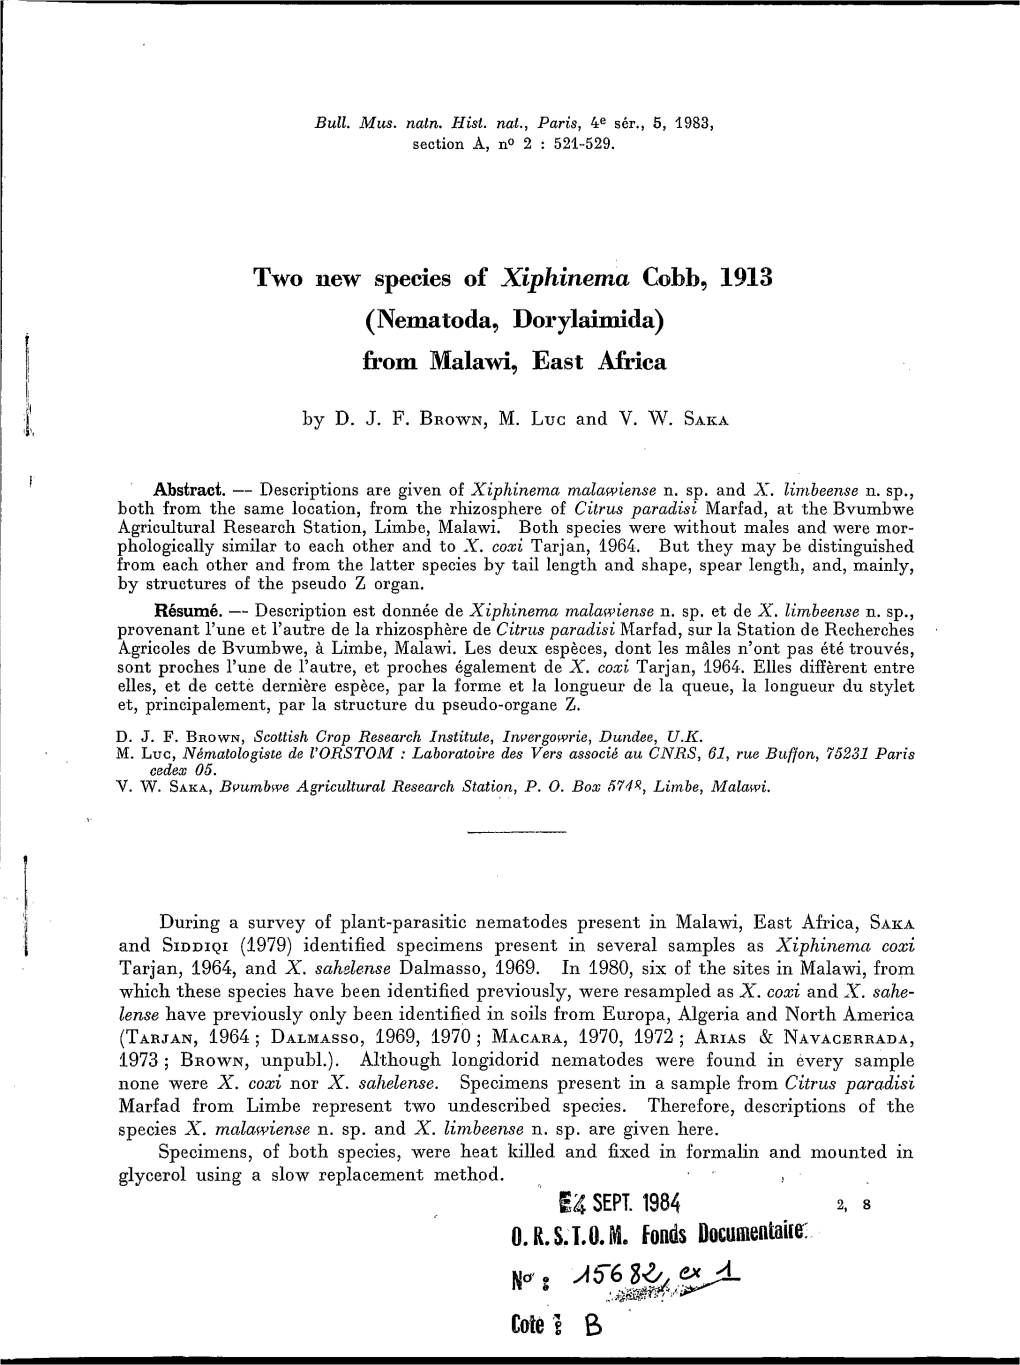 Two New Species of Xiphinema Cobb, 1913 (Nematoda, Dorylaimida) From